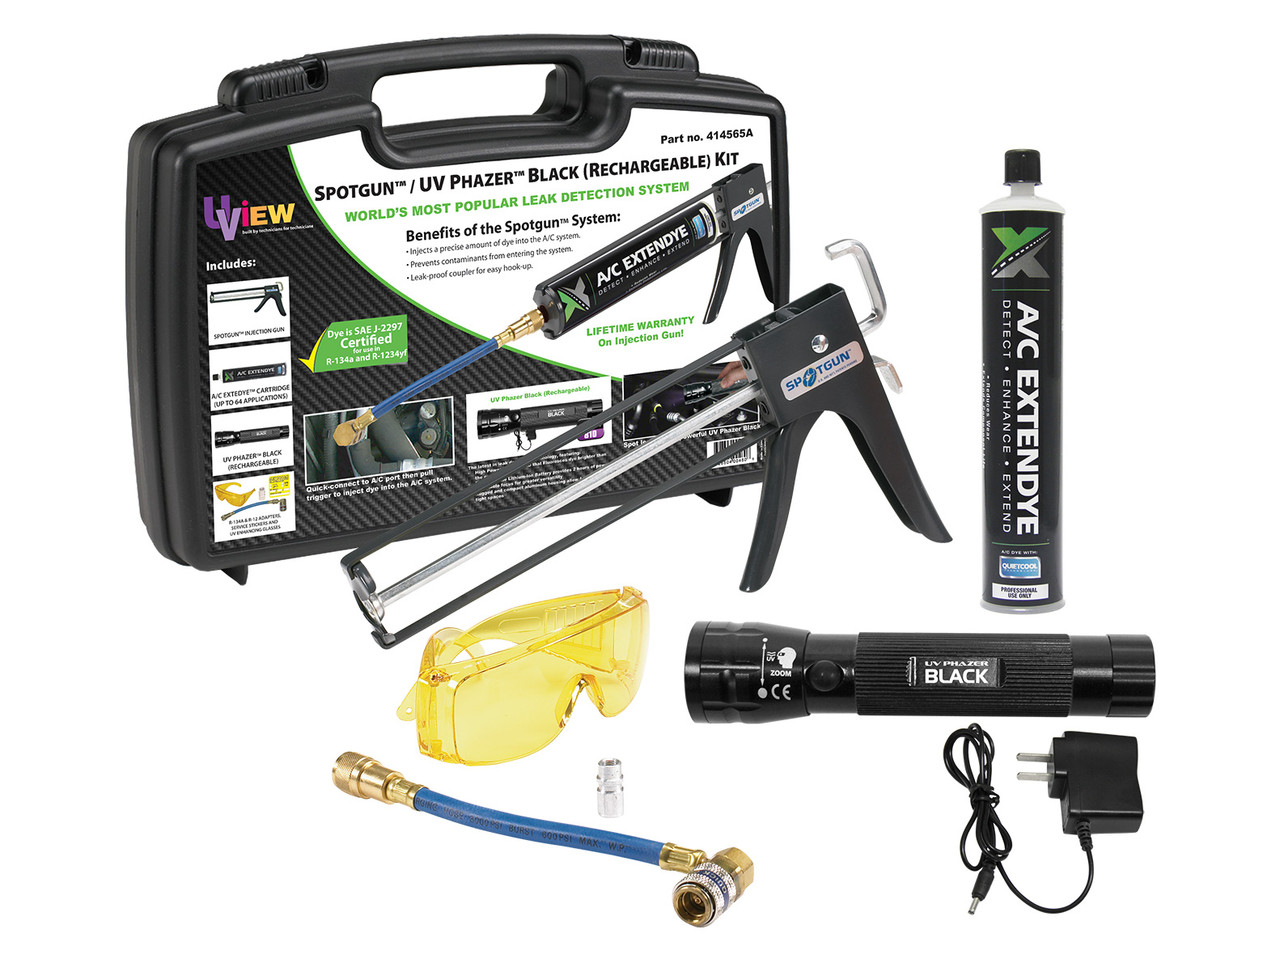 Micro-Lite UV Phazer BLACK Light (Rechargeable) Kit 414565A